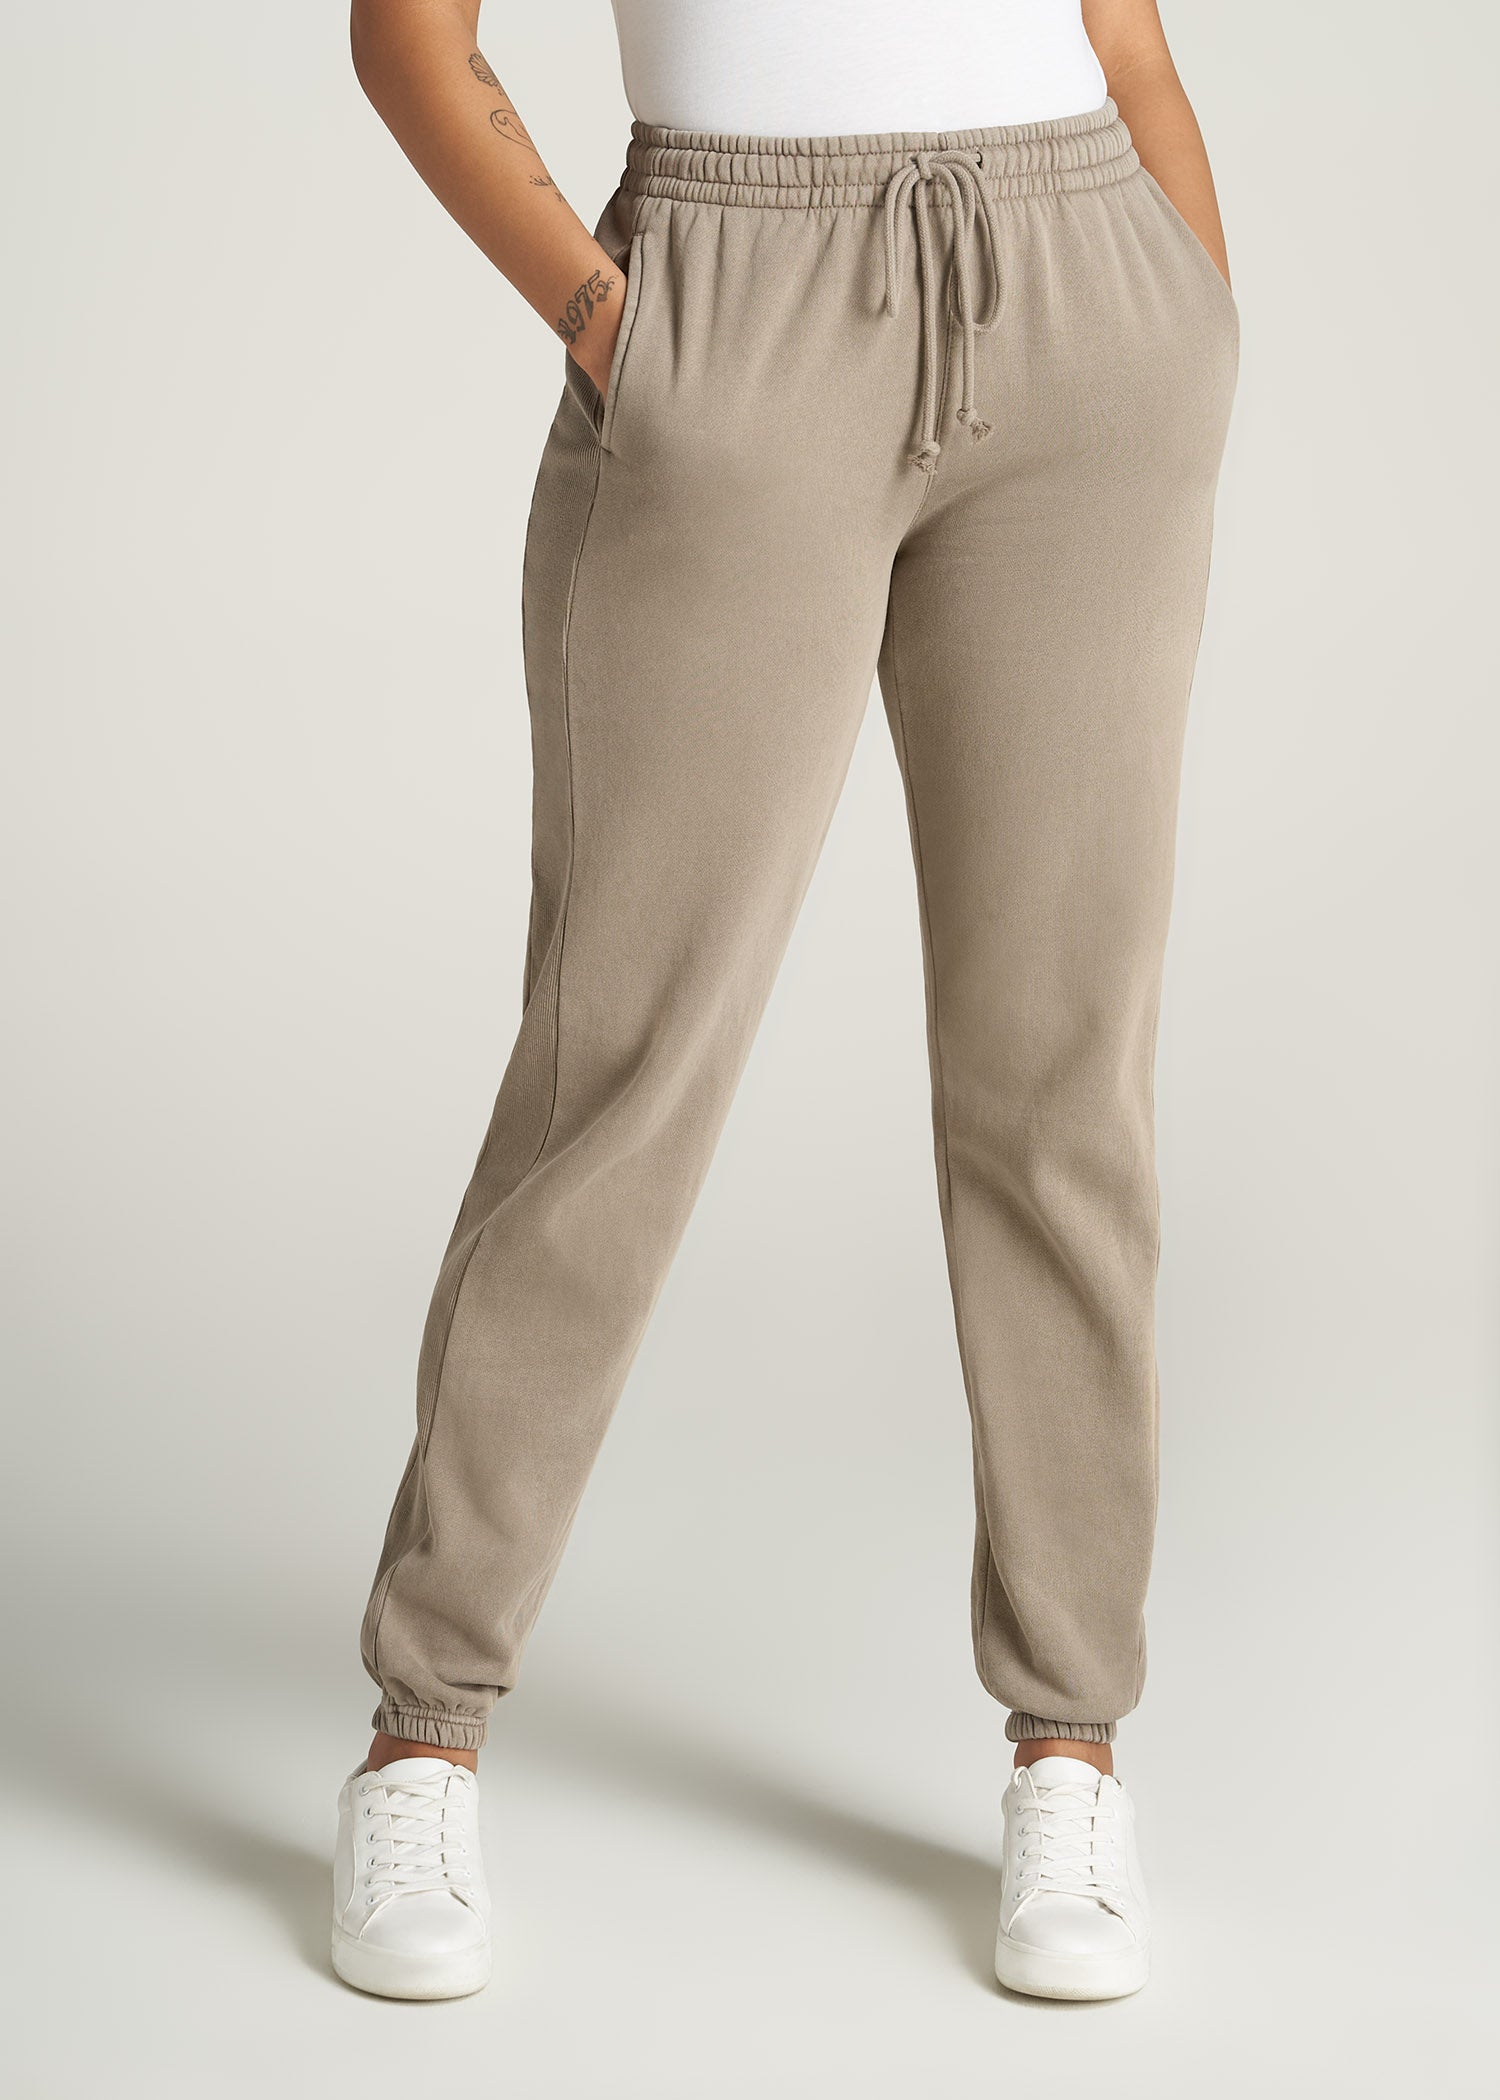 Long Inseam Sweatpants: Tall Woman's Sweatpants Khaki